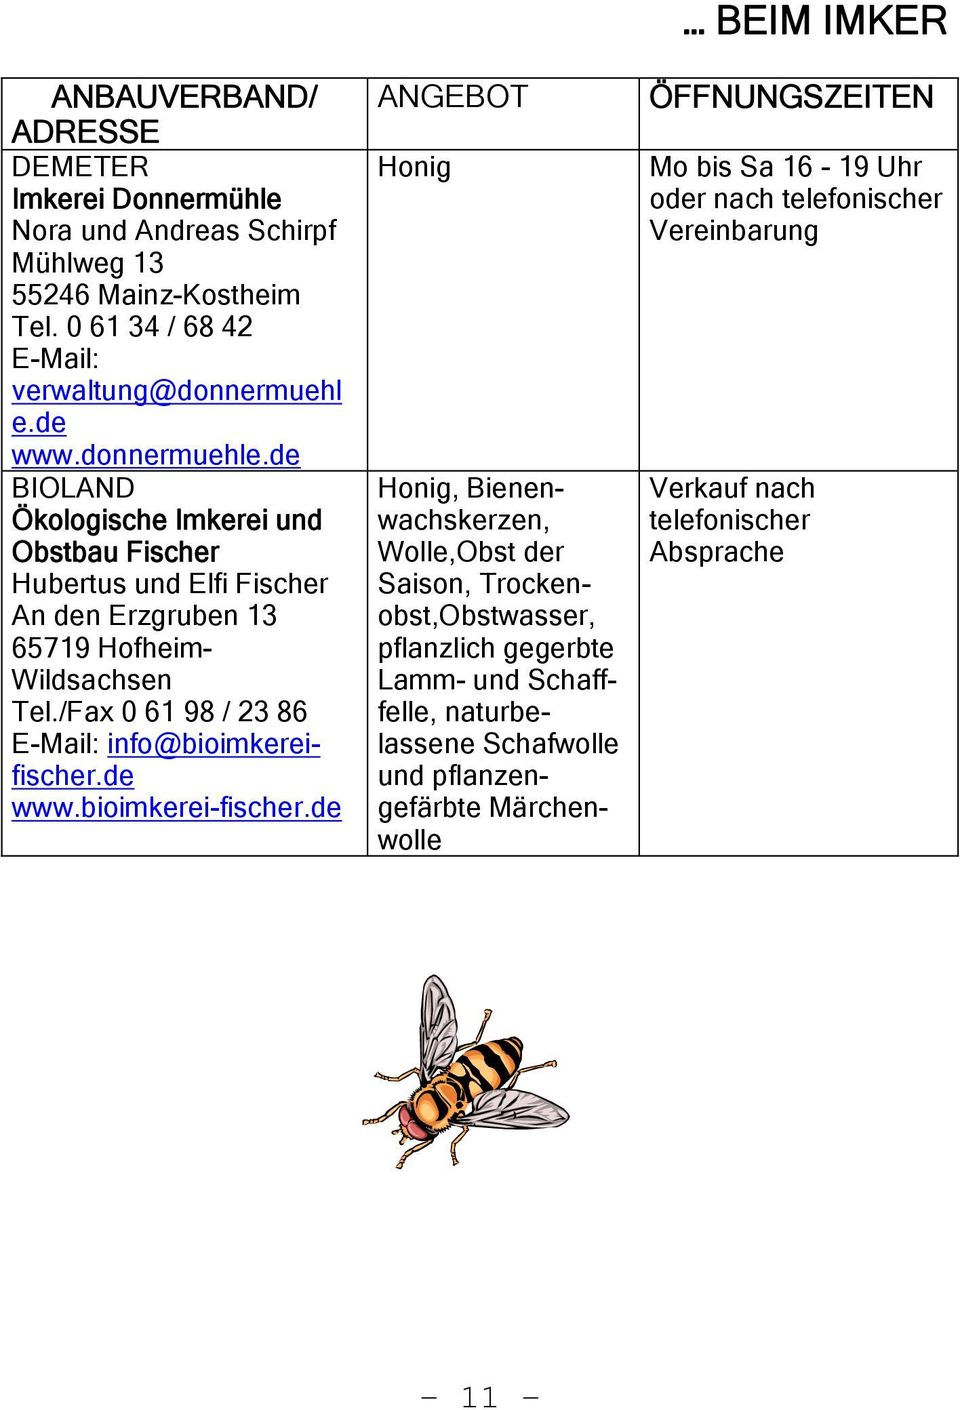 /Fax 0 61 98 / 23 86 E-Mail: info@bioimkereifischer.de www.bioimkerei-fischer.